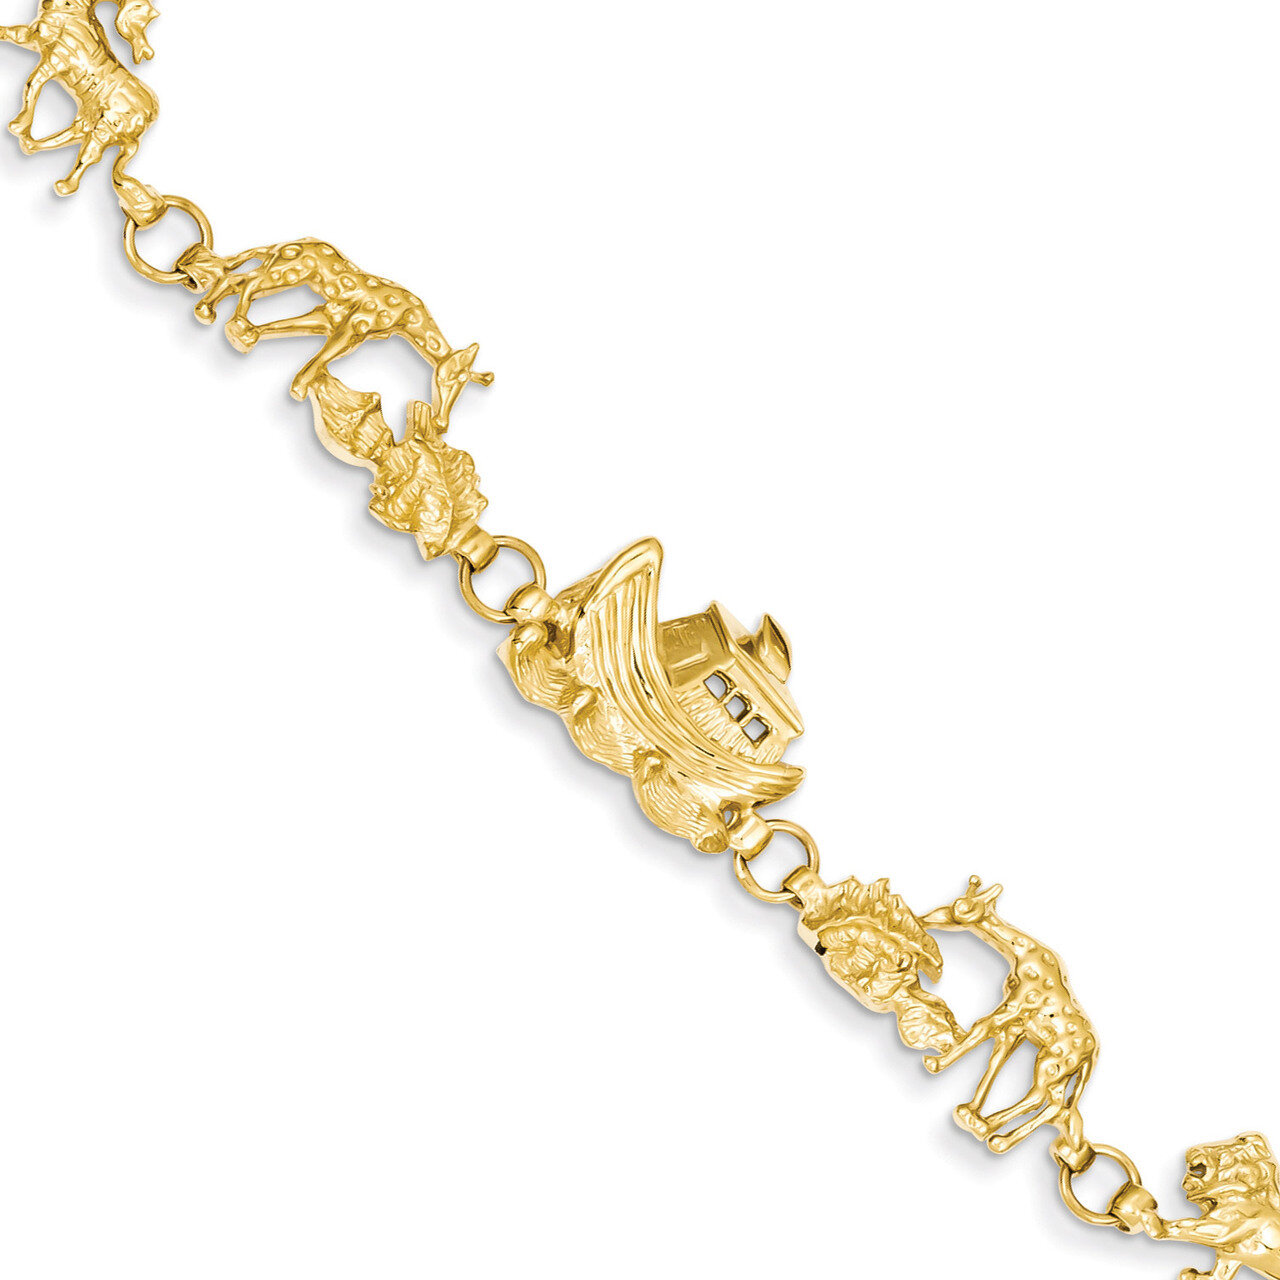 Noah's Ark Bracelet 7 Inch 14k Gold FB375-7